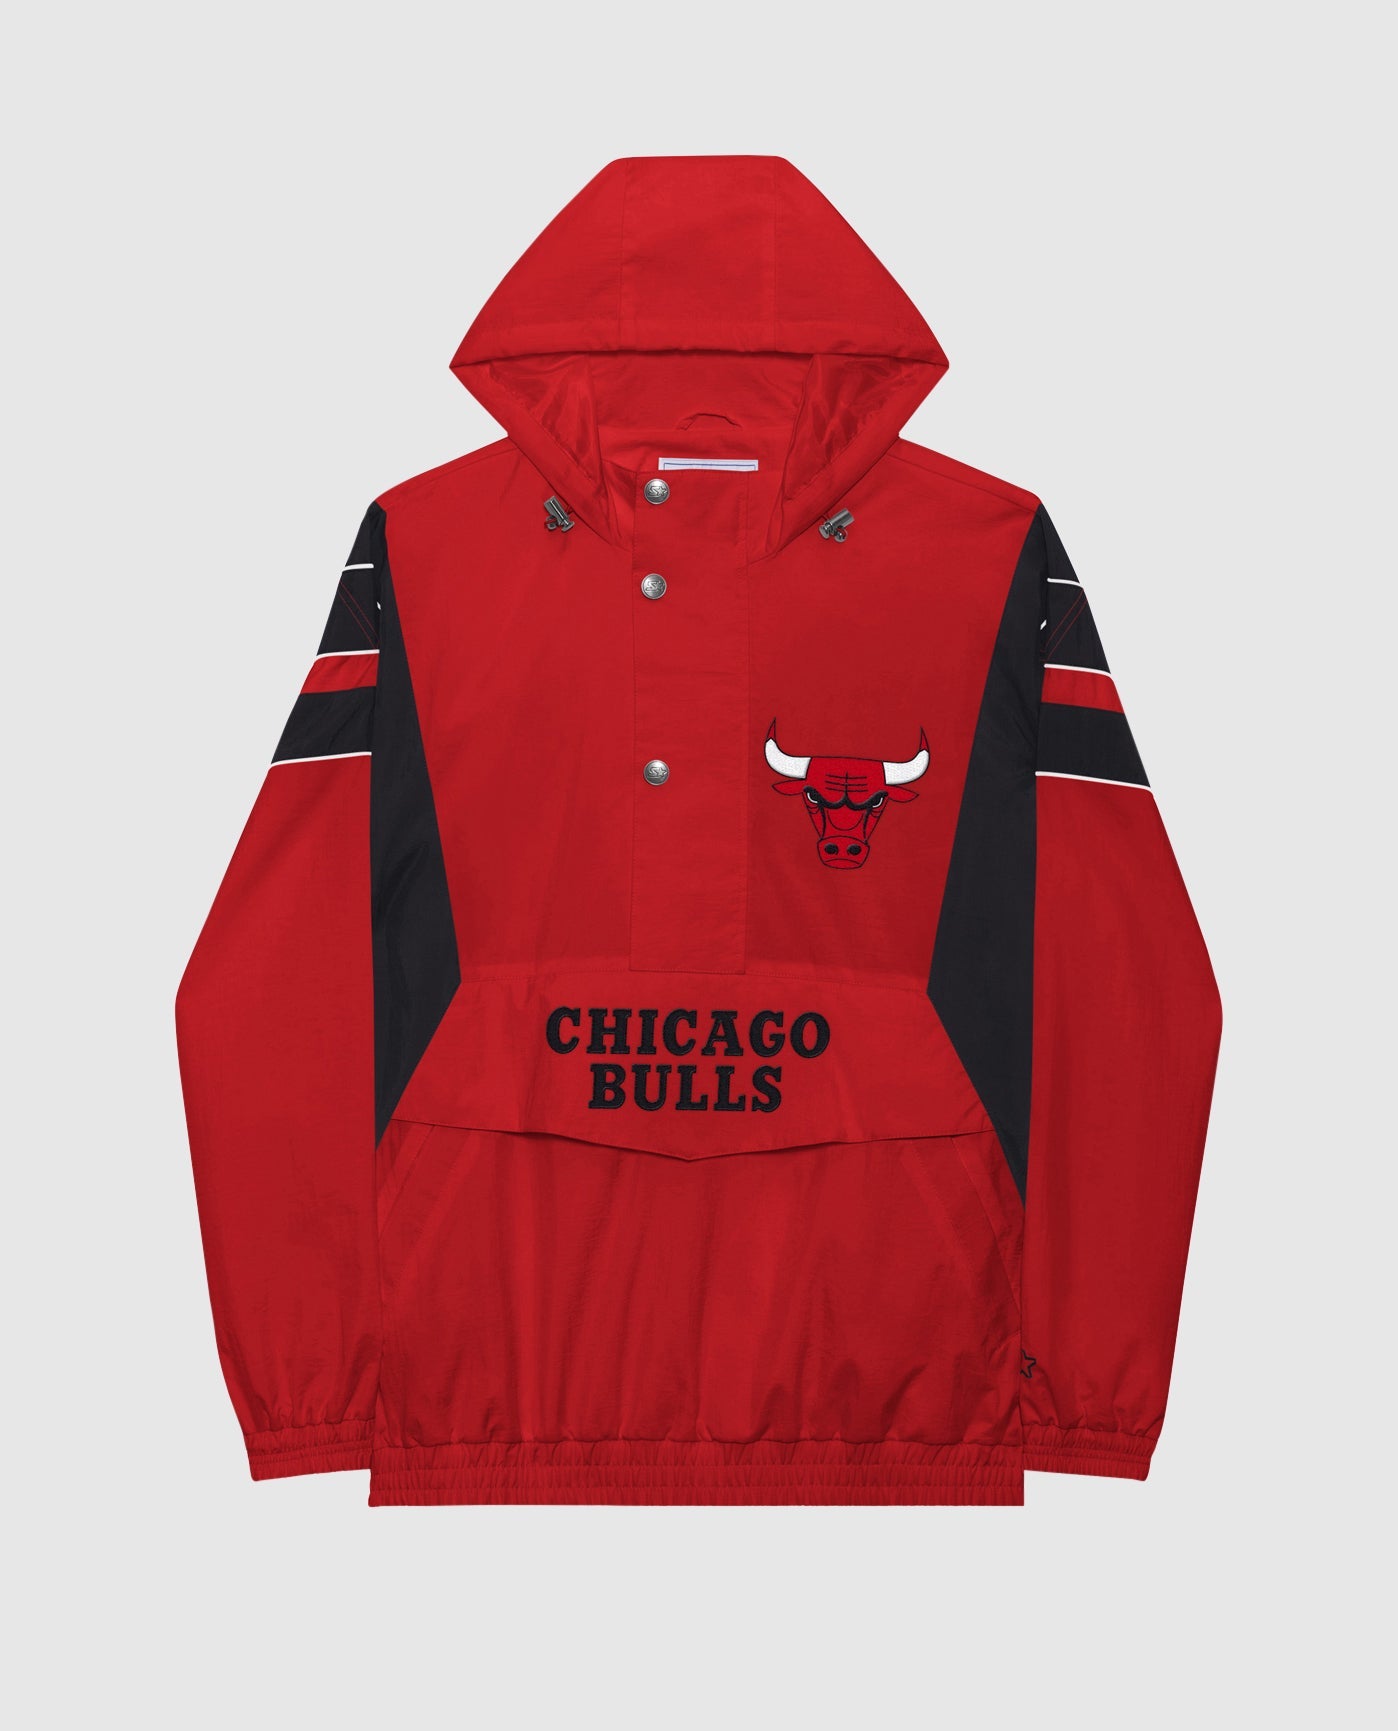 Chicago Bulls Starter Jackets , Bulls Pullover Starter Jacket, Throwback 90's  Jackets